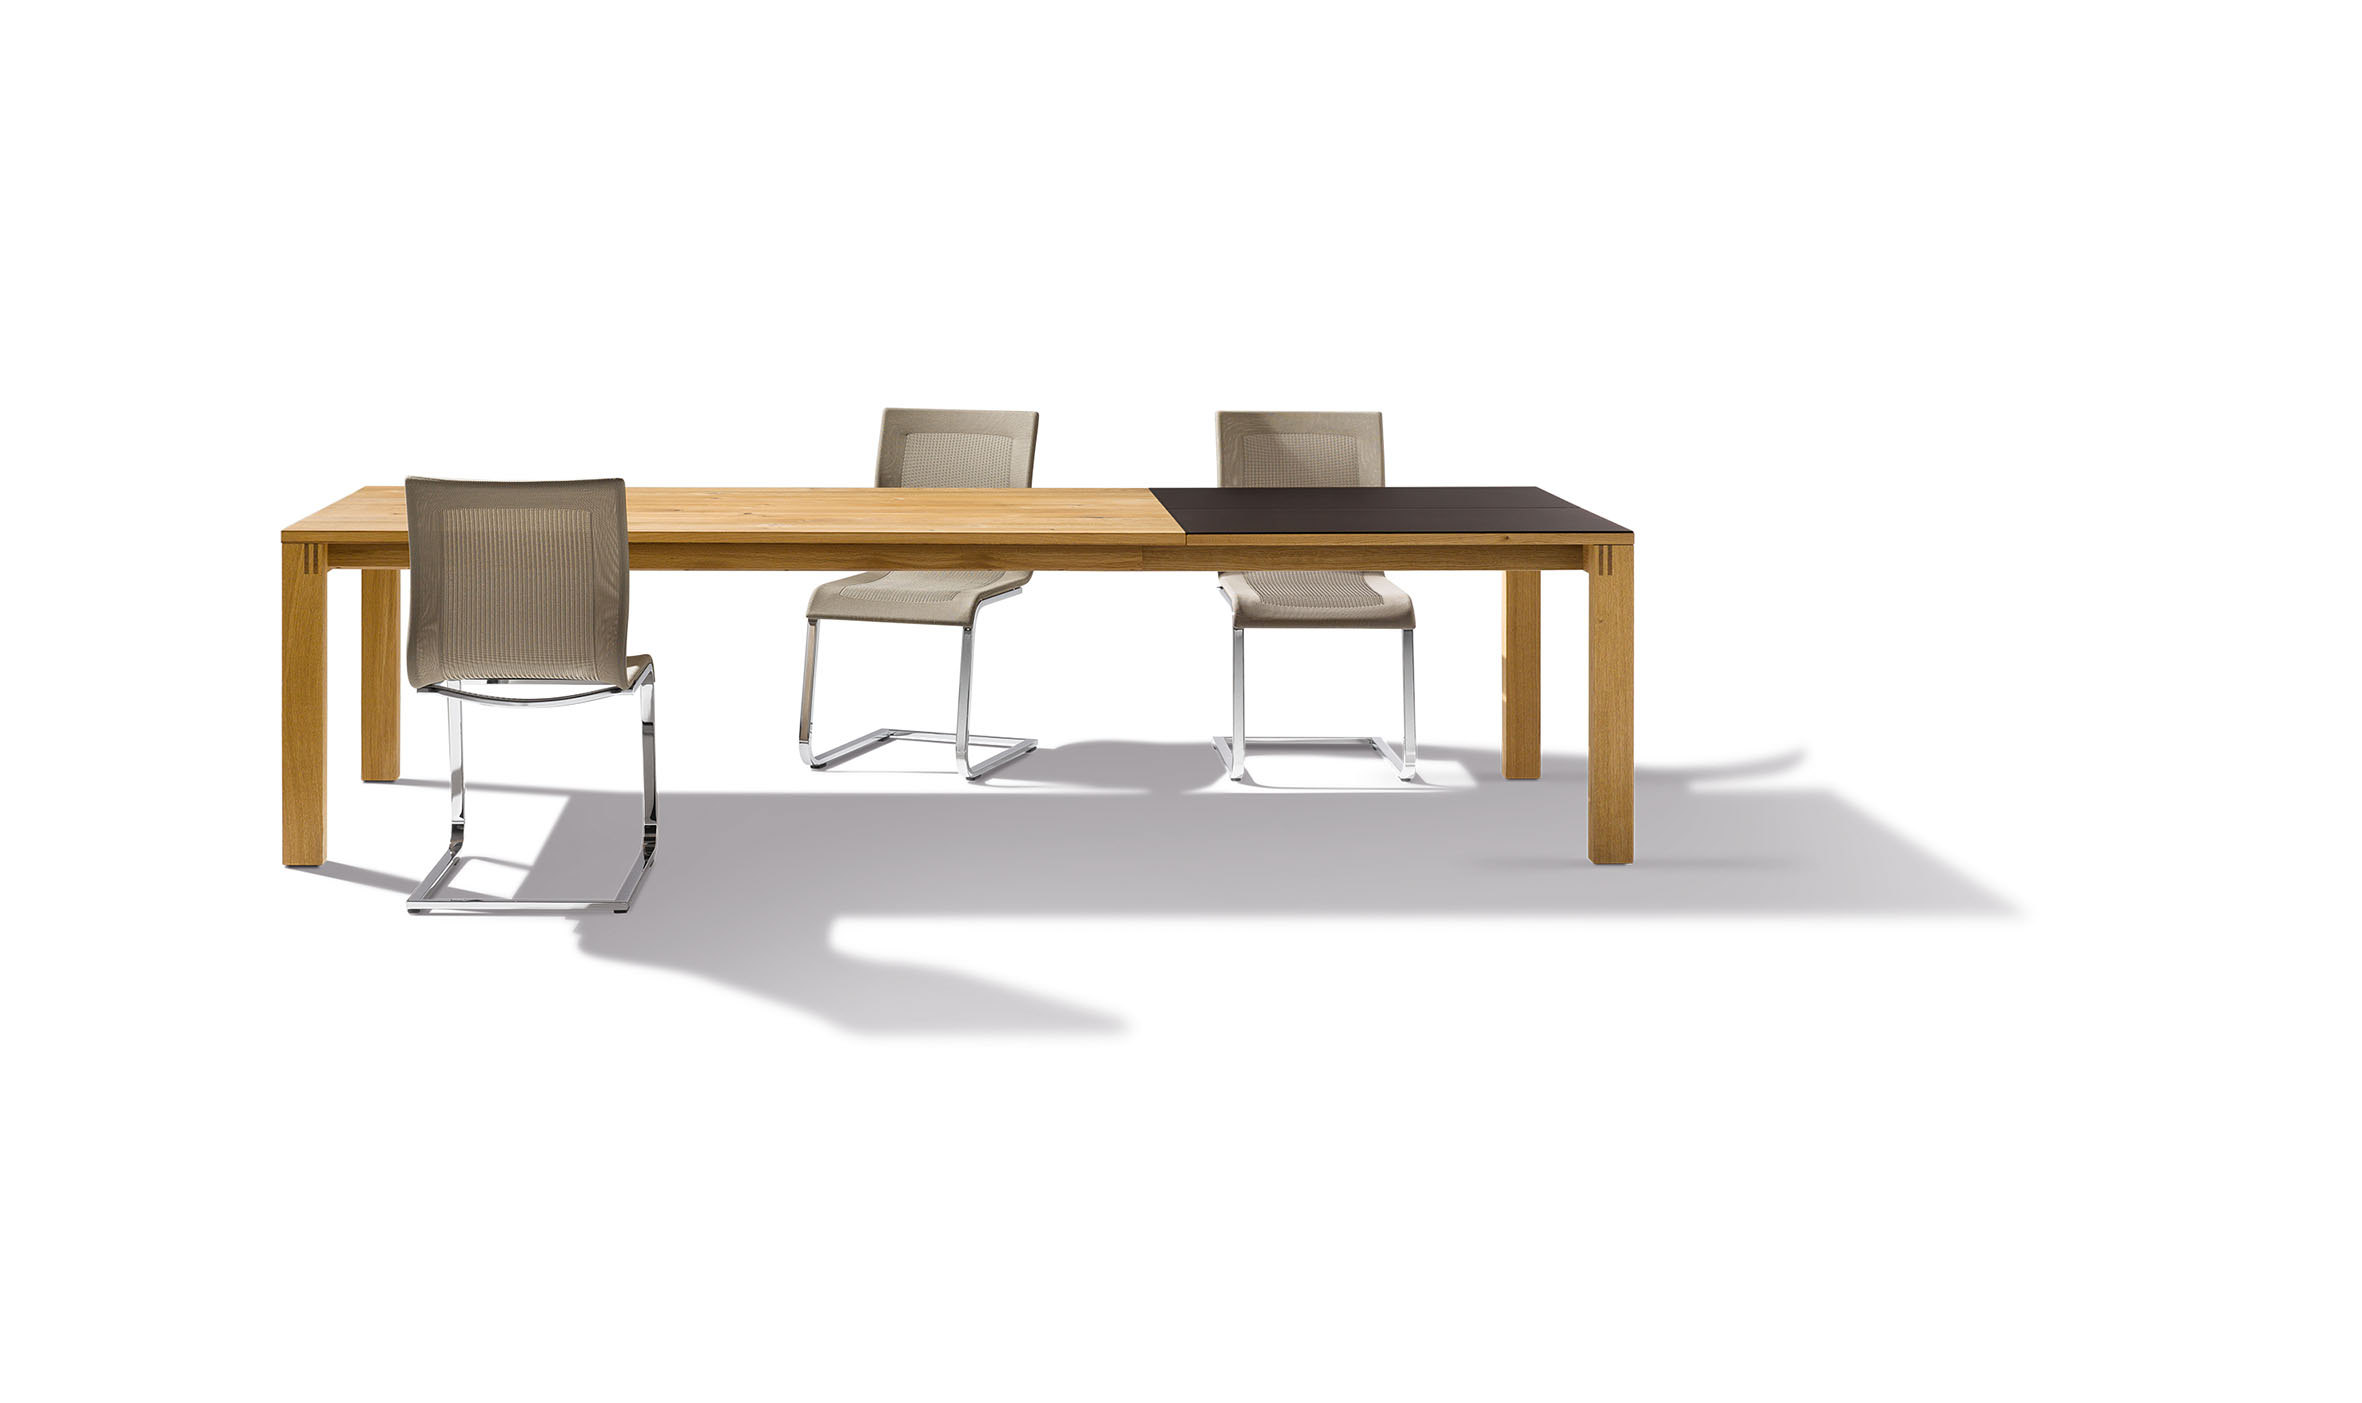 Team 7 tavoli allungabili: il legno naturale custodisce sofisticate tecnologie